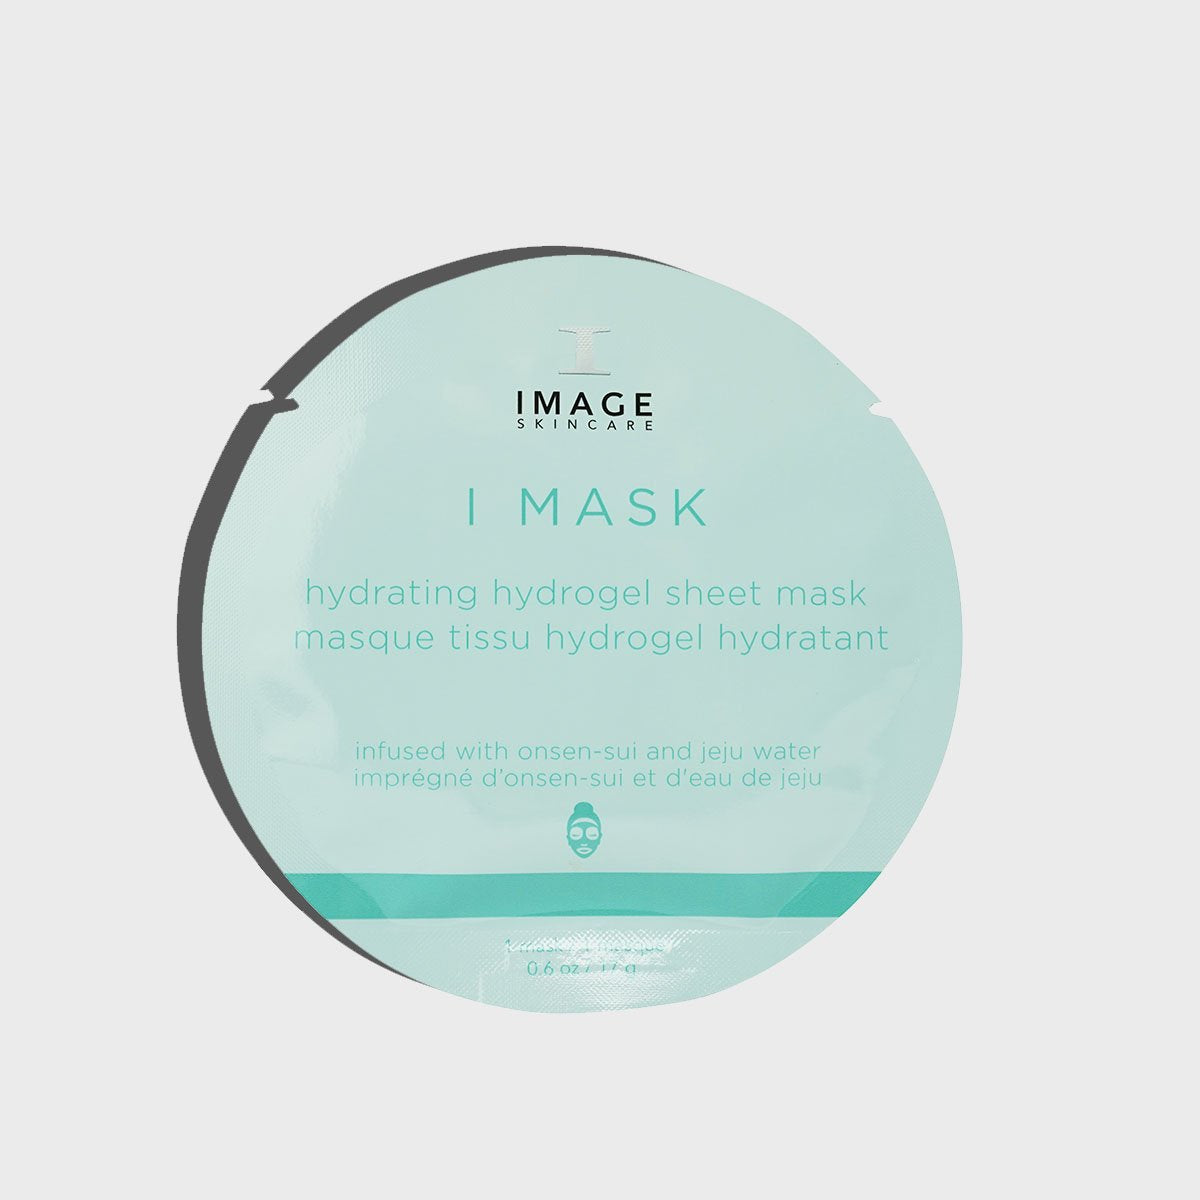 RETAIL - I MASK hydrating hydrogel sheet mask - 5 Pack - MK-201N